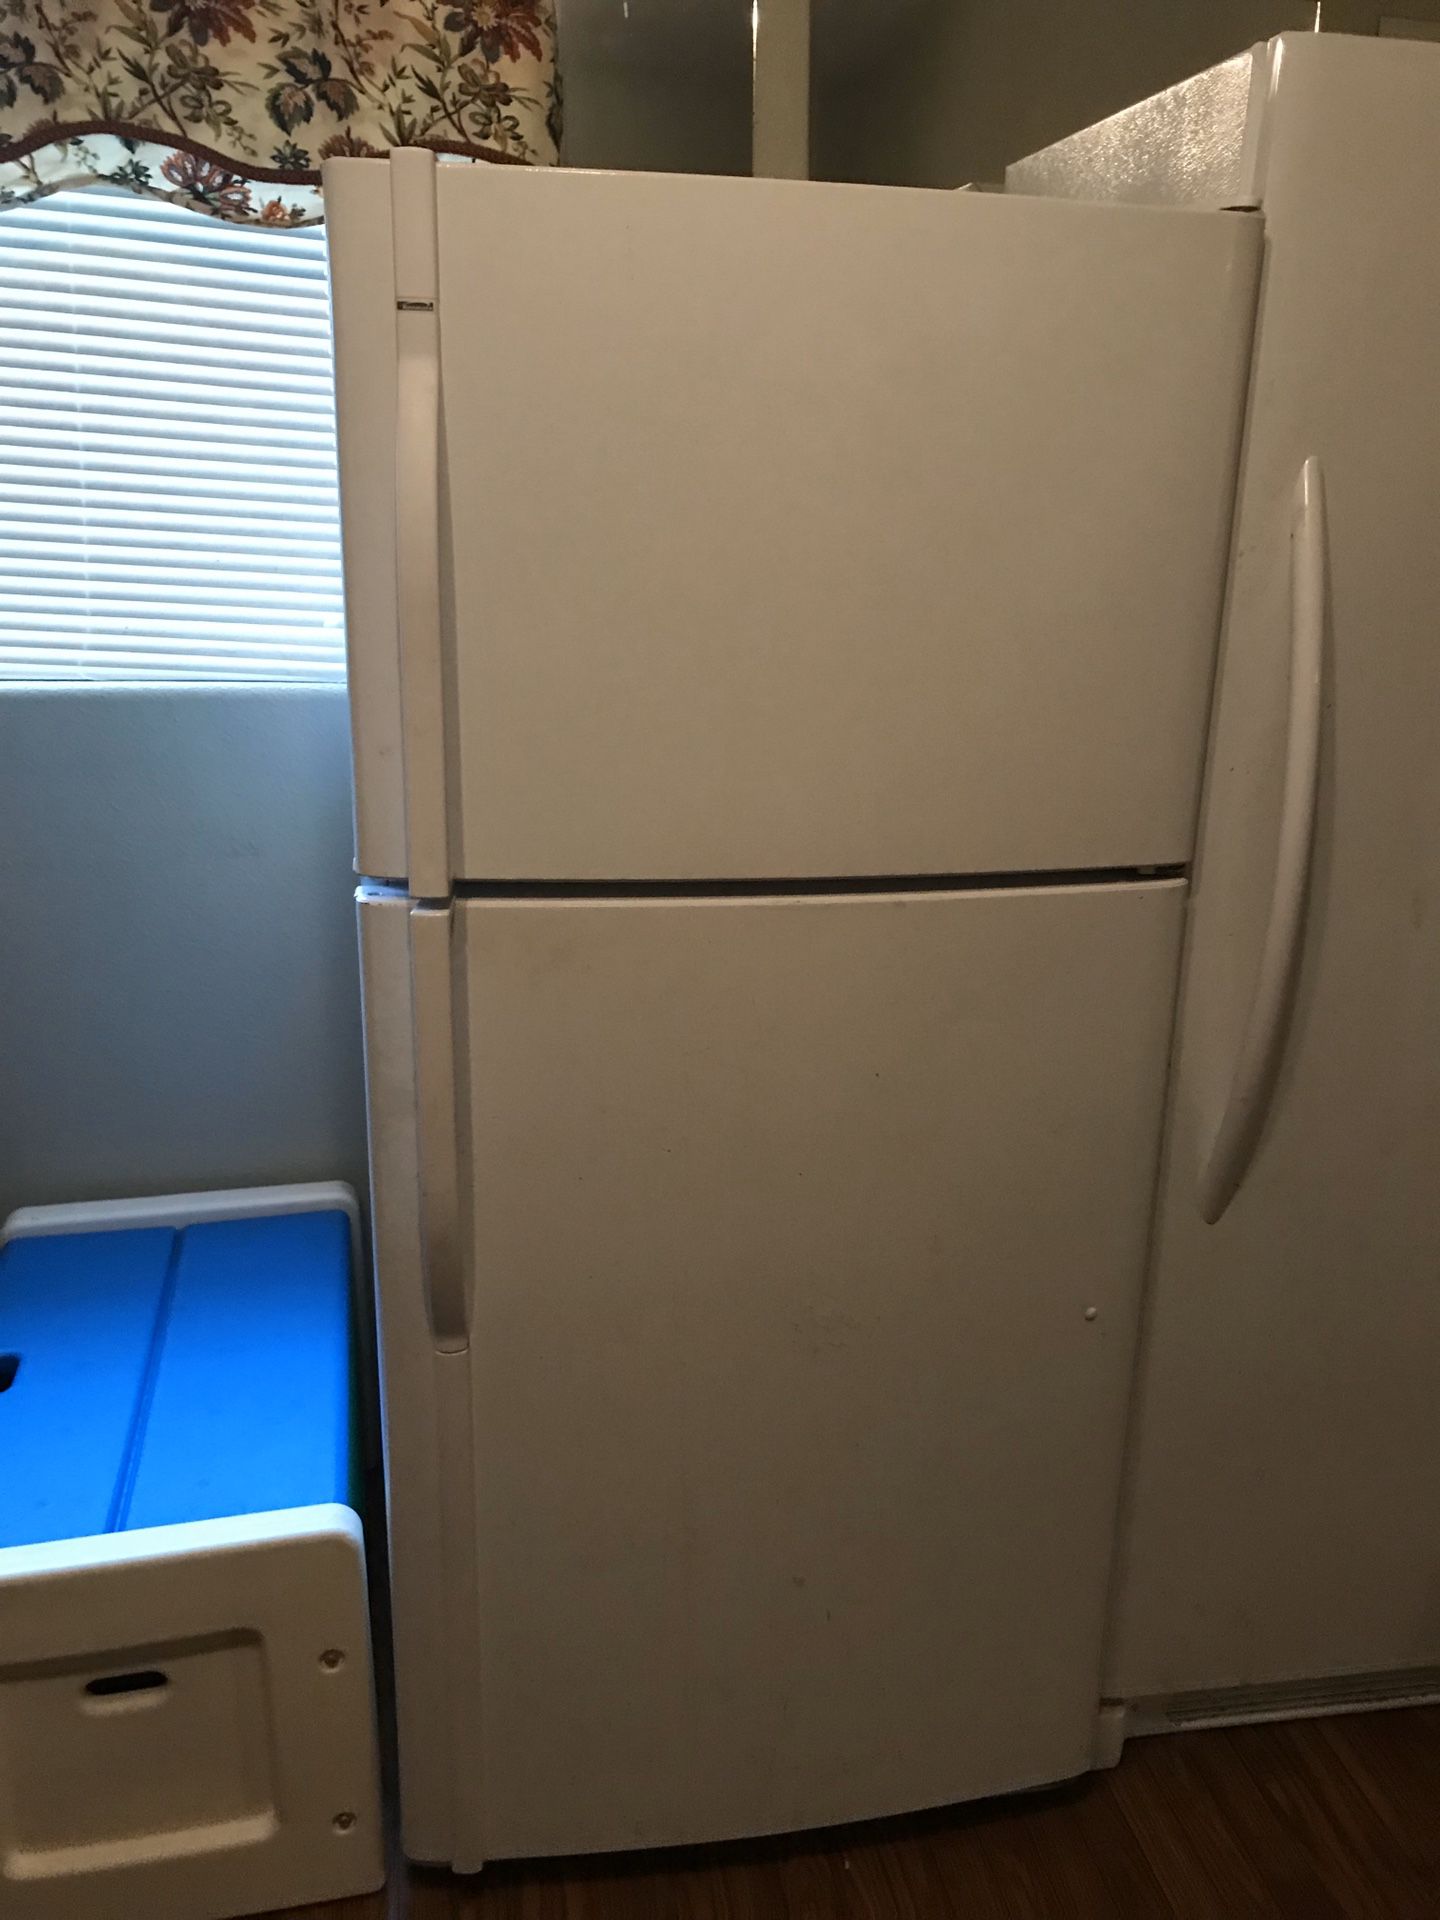 Refrigerator / freezer